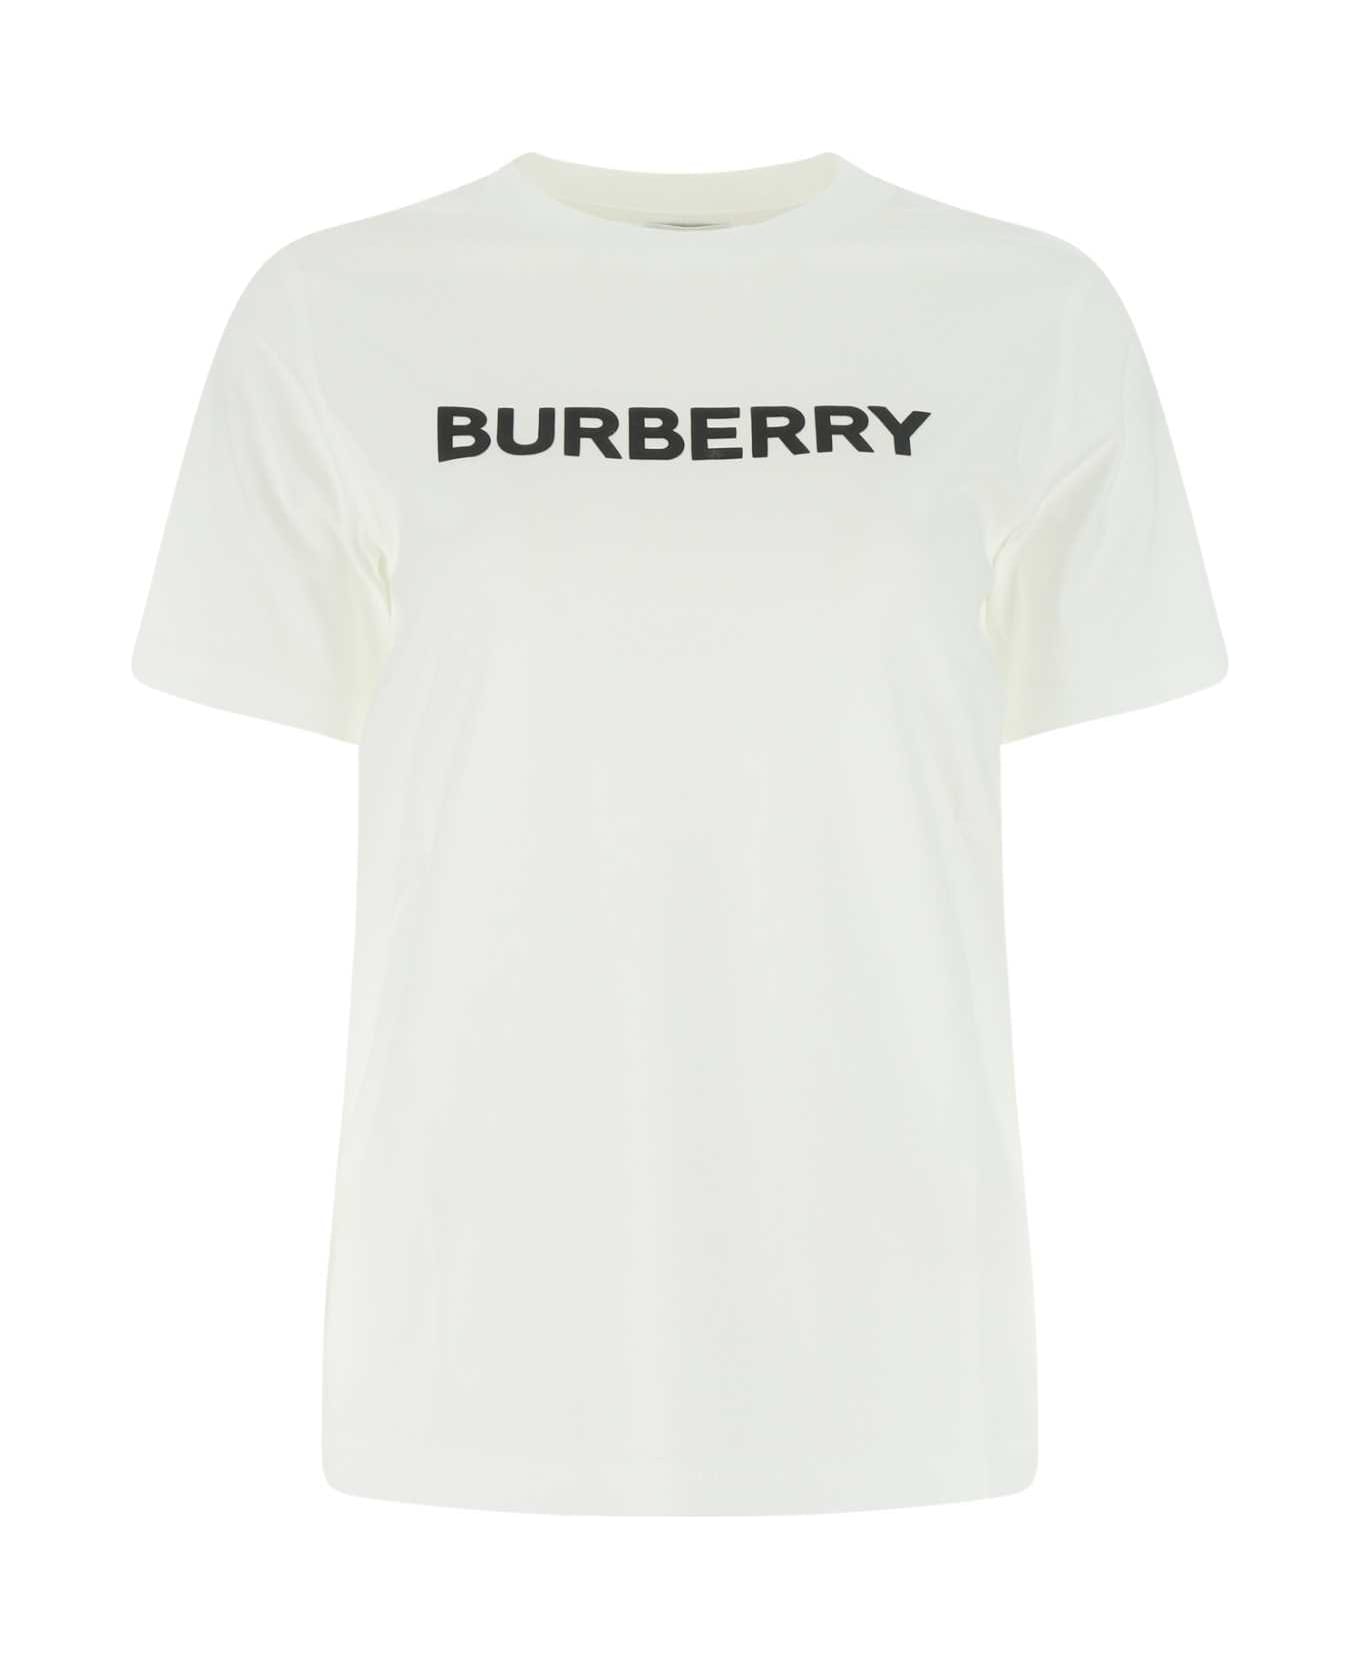 Burberry White Cotton T-shirt - A1464